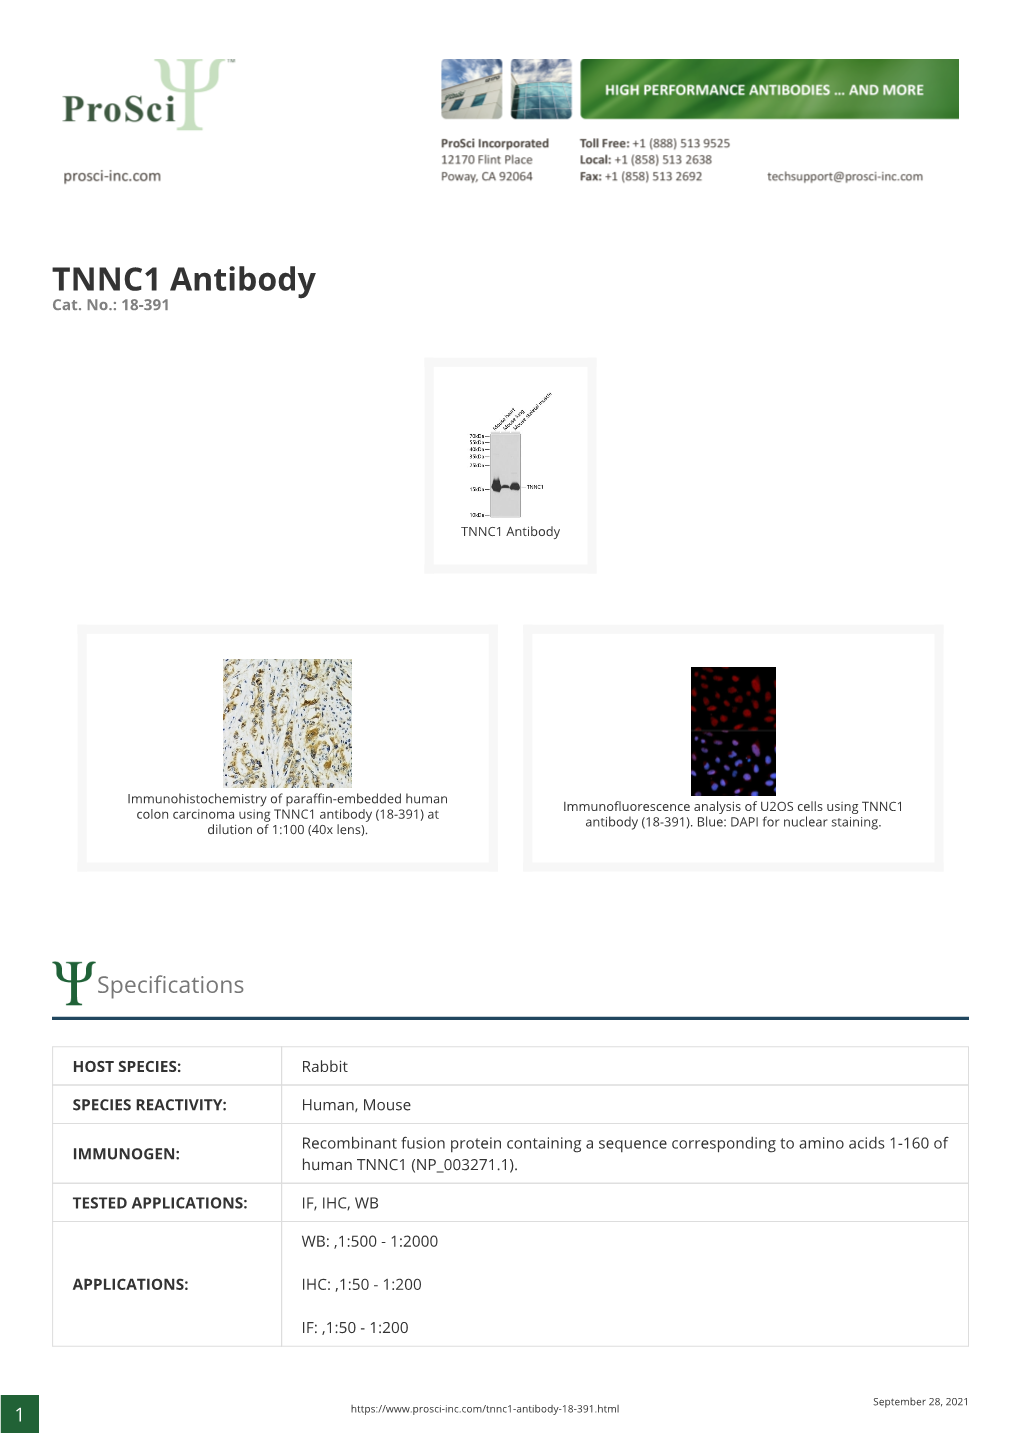 TNNC1 Antibody Cat